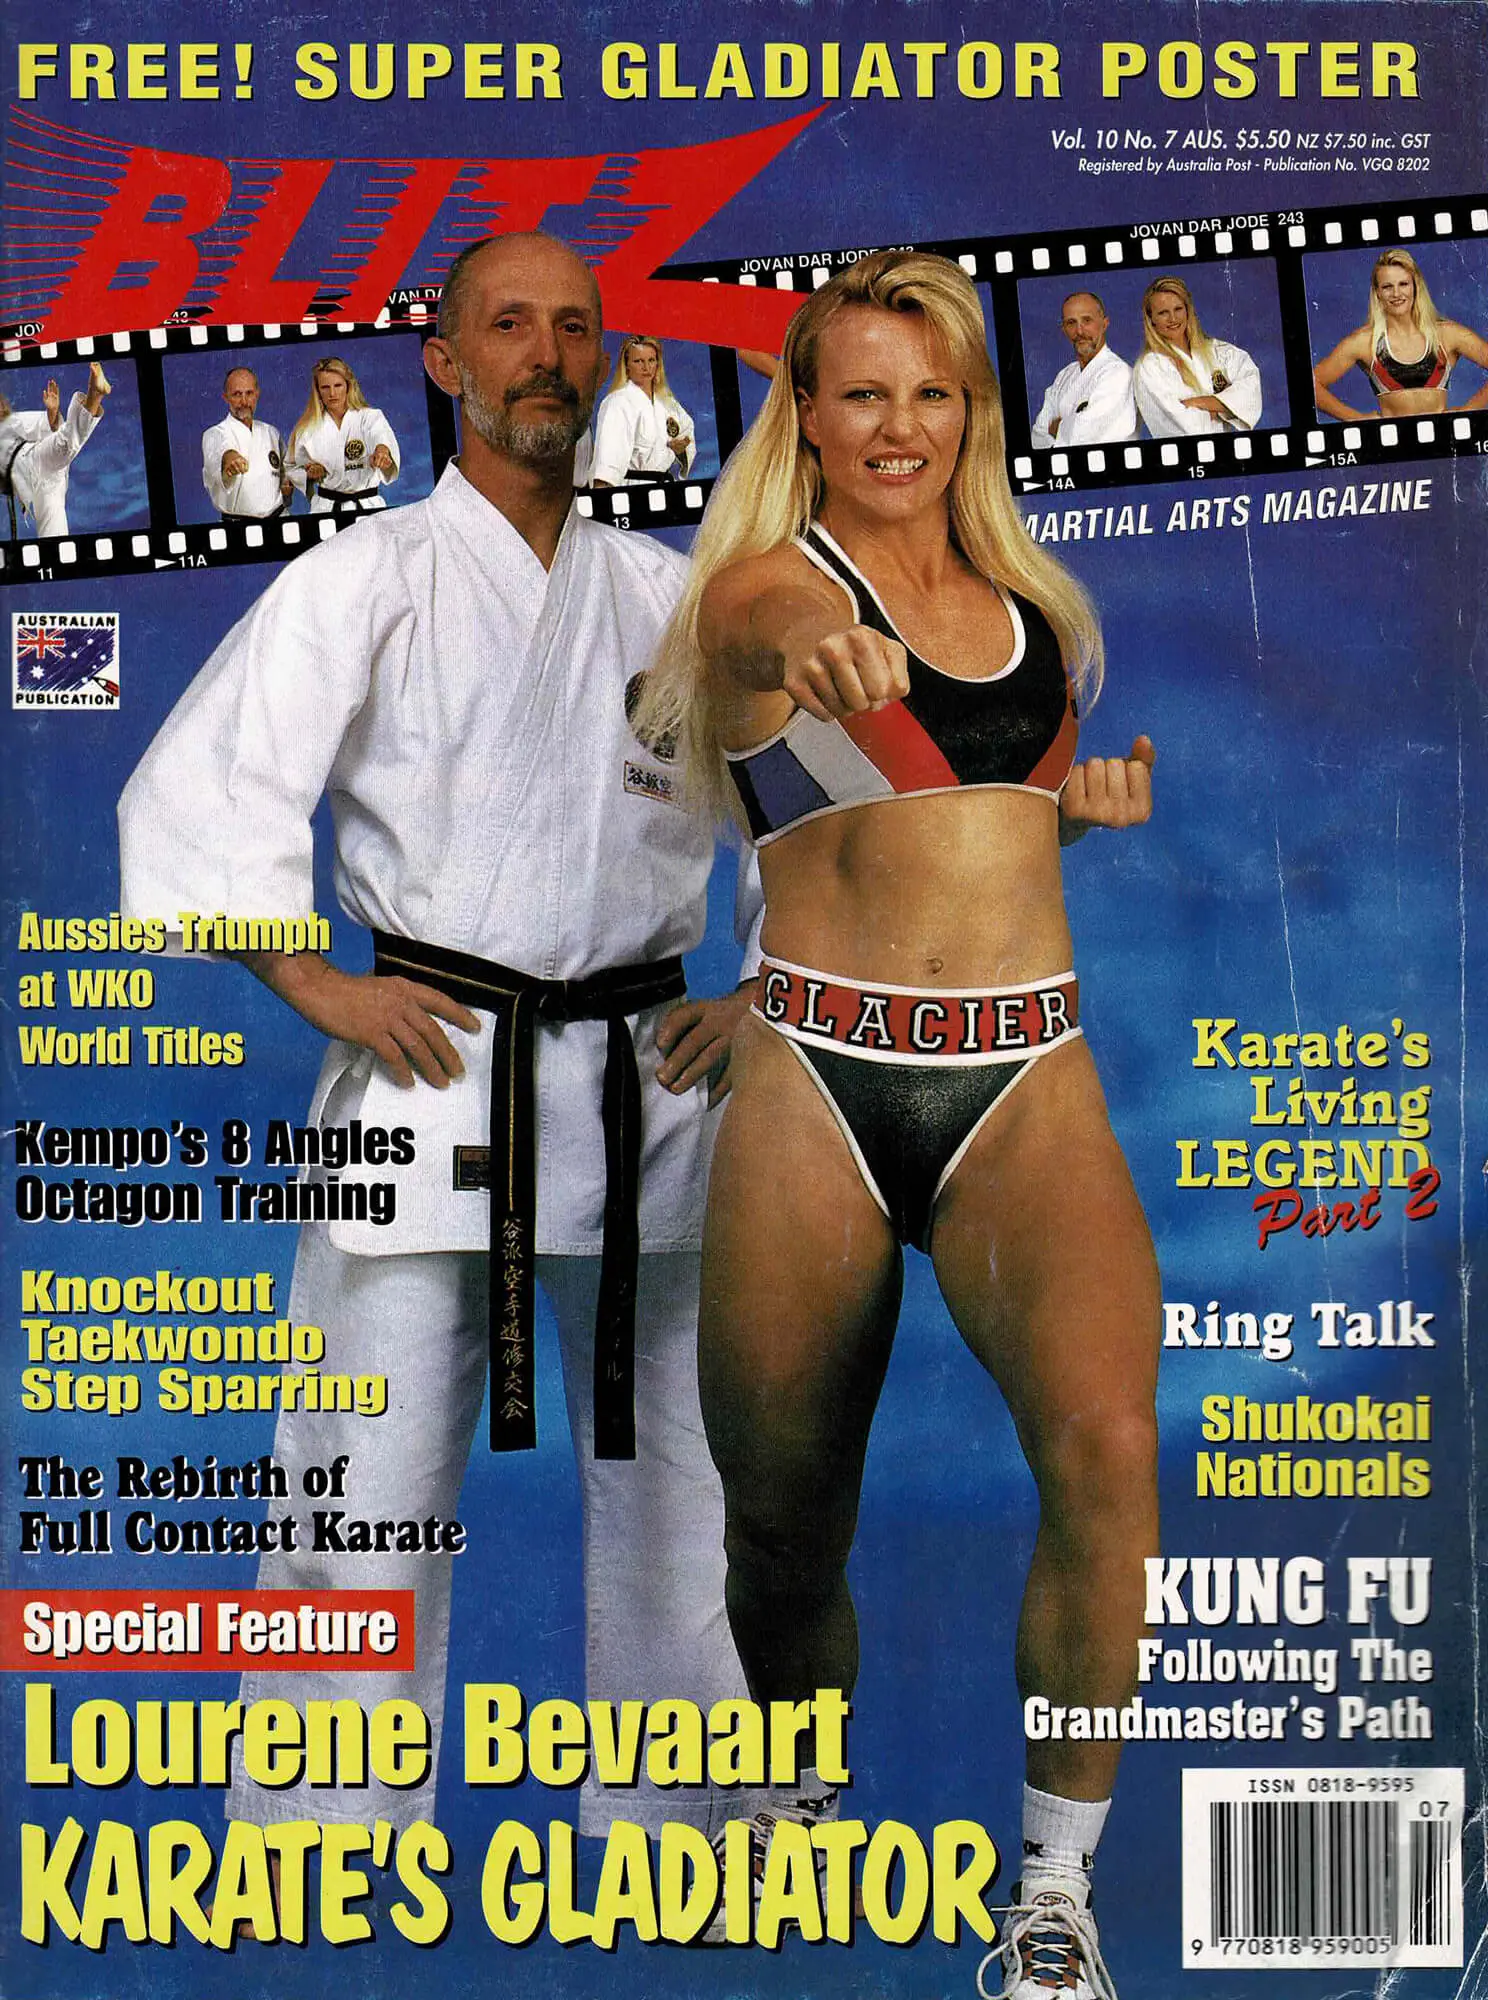 Asea Healing Tao Australia. Lourene Bevaart wearing fighting equipment standing next to a man wearing a Karate uniform with a black belt